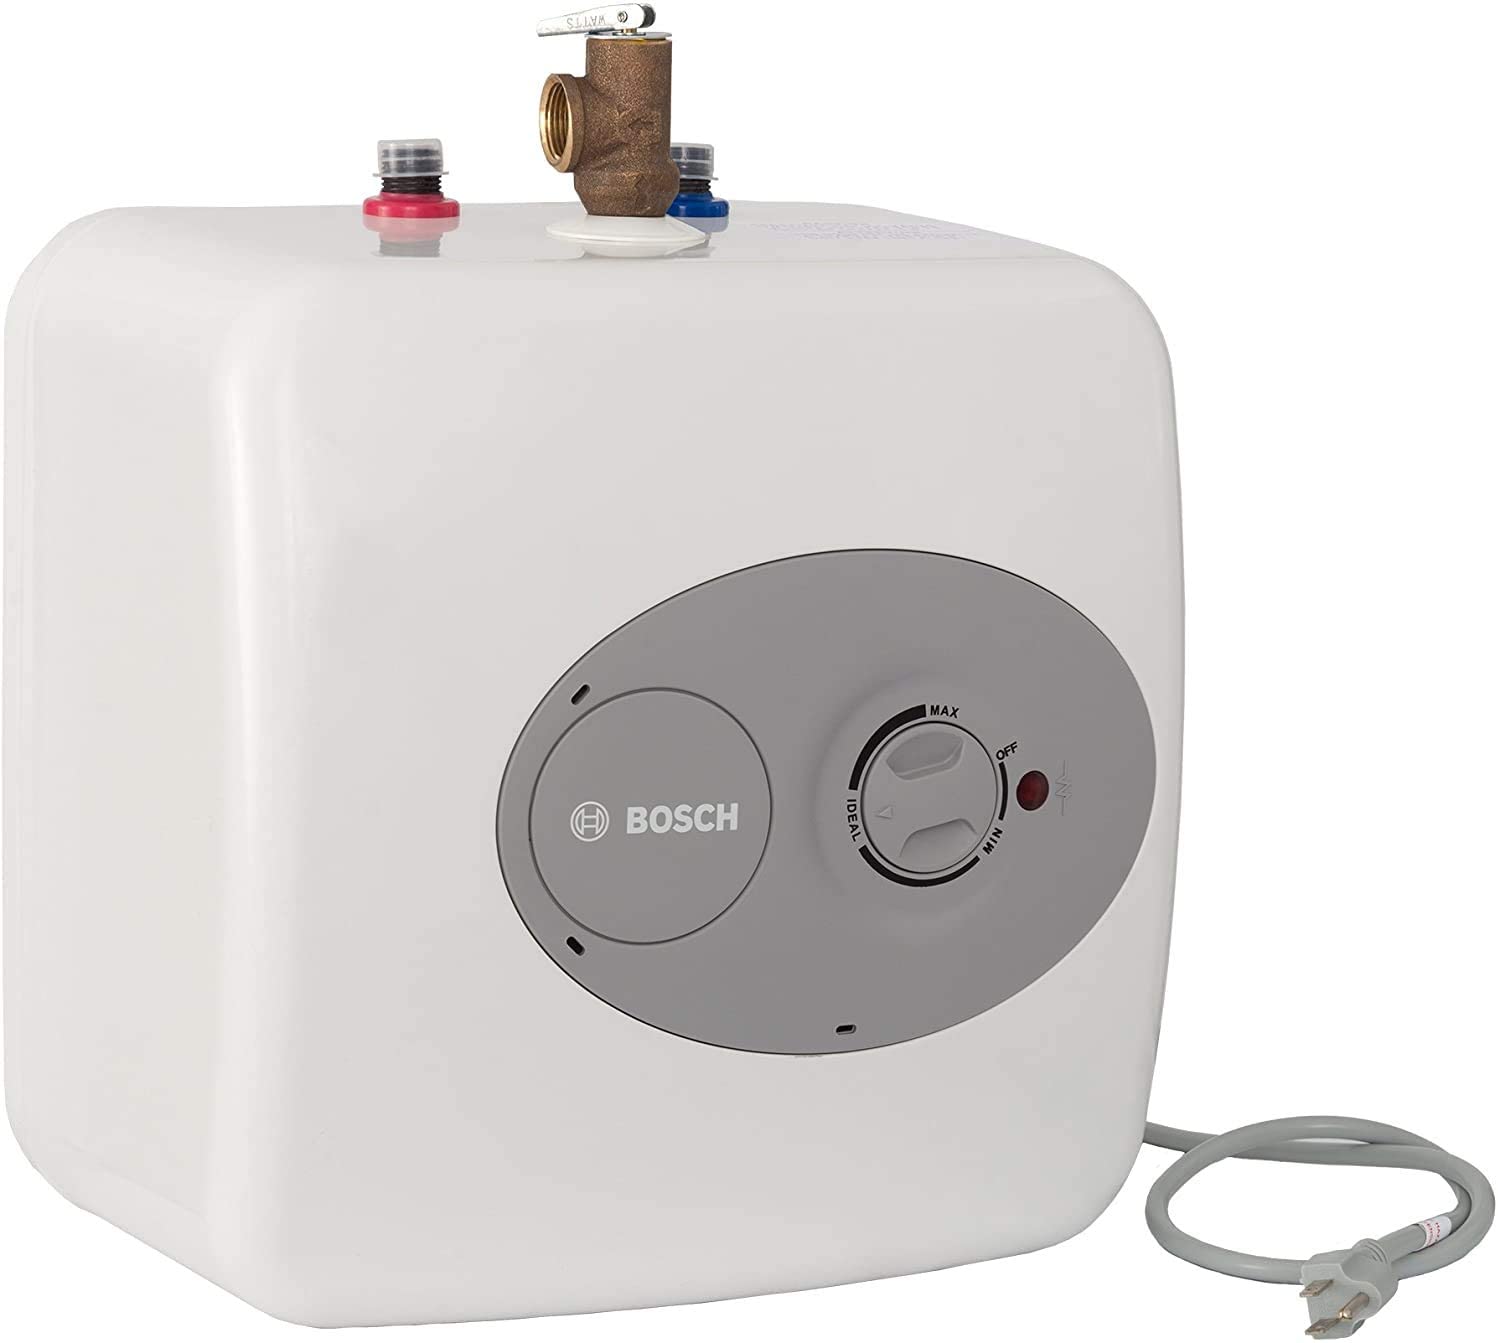 Bosch Electric Mini Tank Water Heater